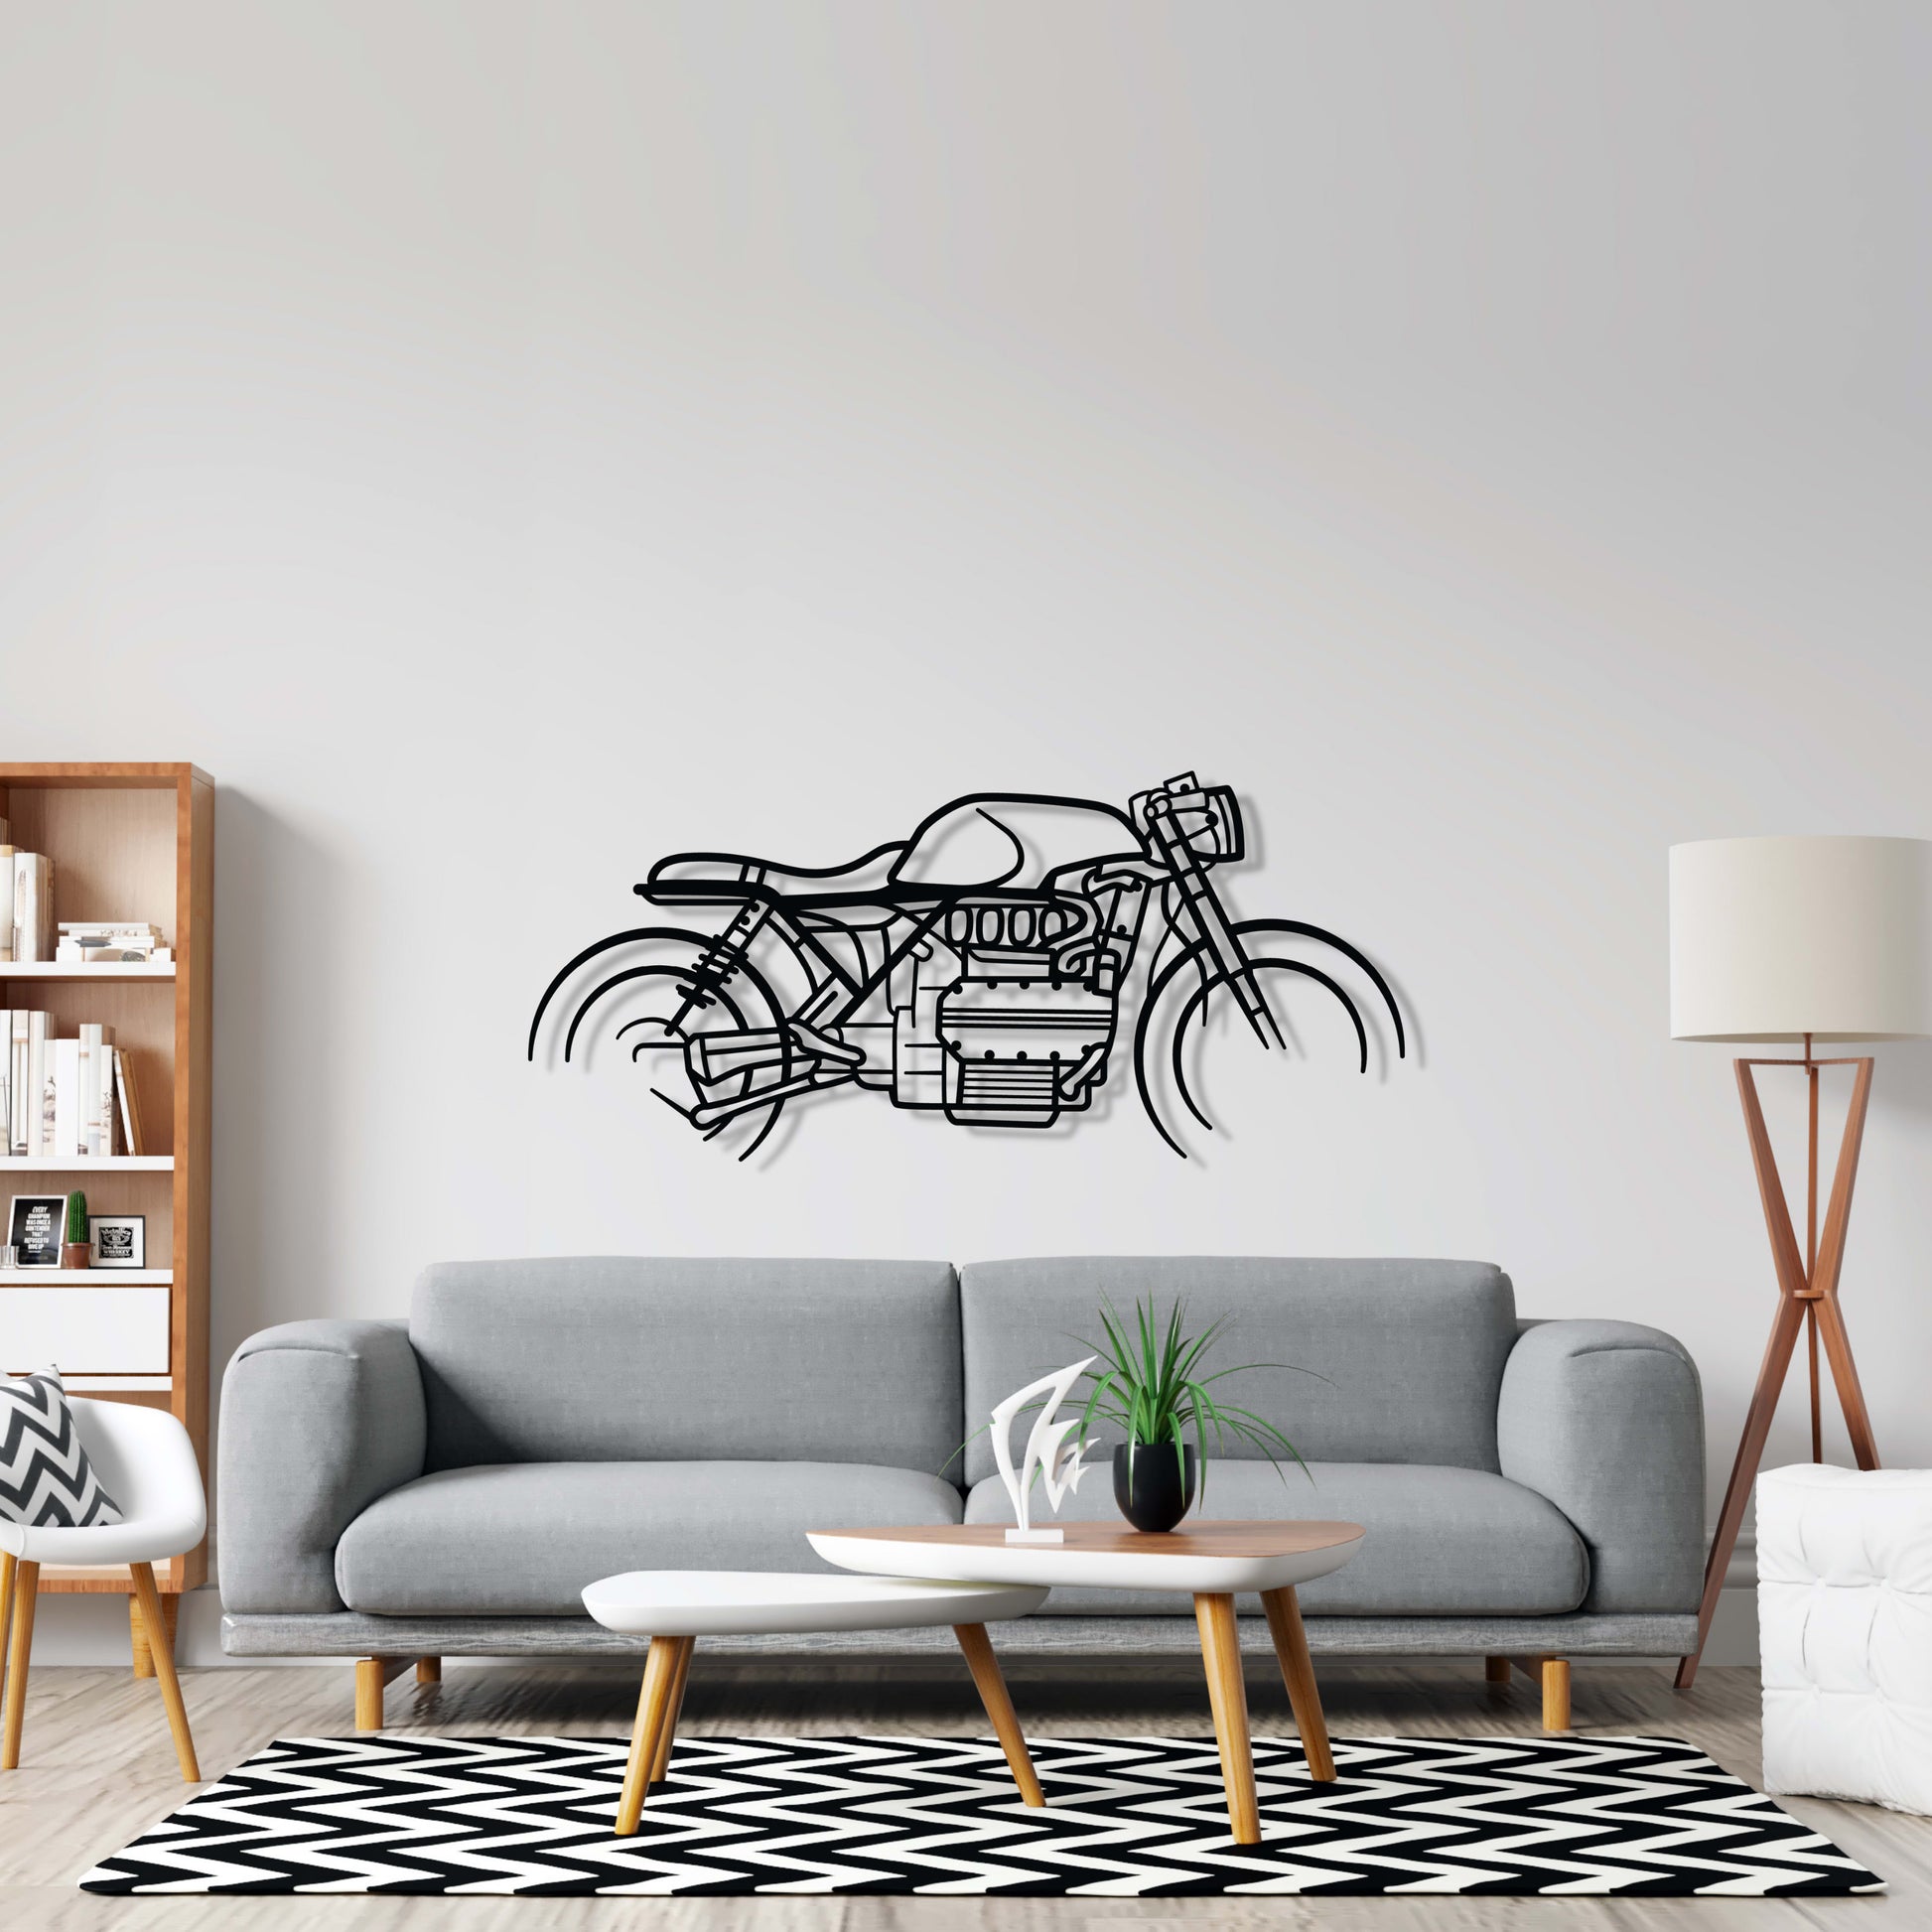 Metal Motorcycle Wall Art - Motorcycle Metal Signs - Metal Signs For Garage - Garage Decorations